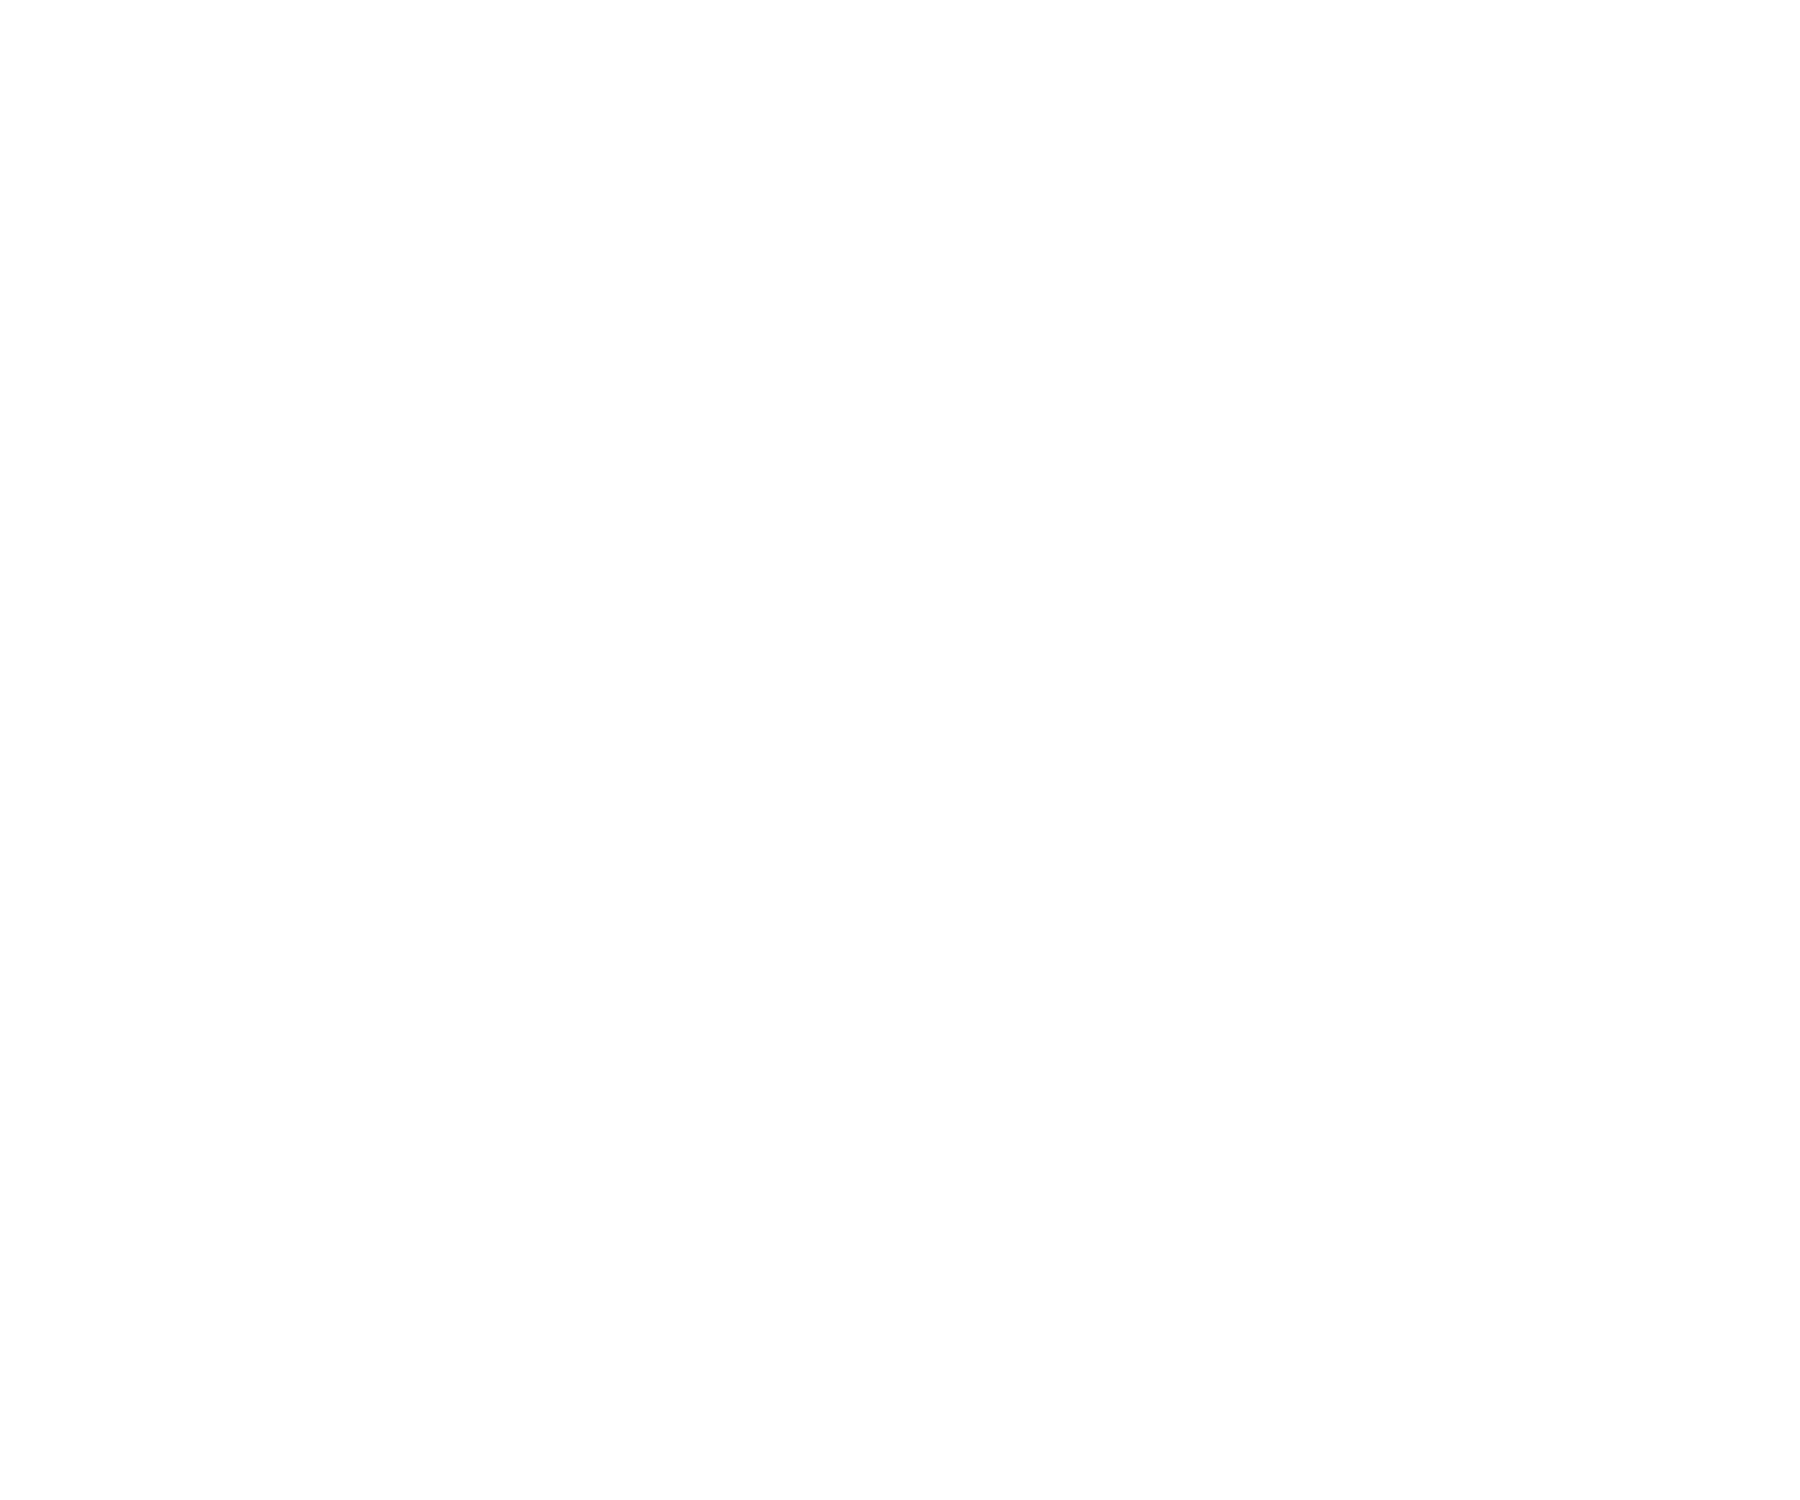 Masterbuilt logo